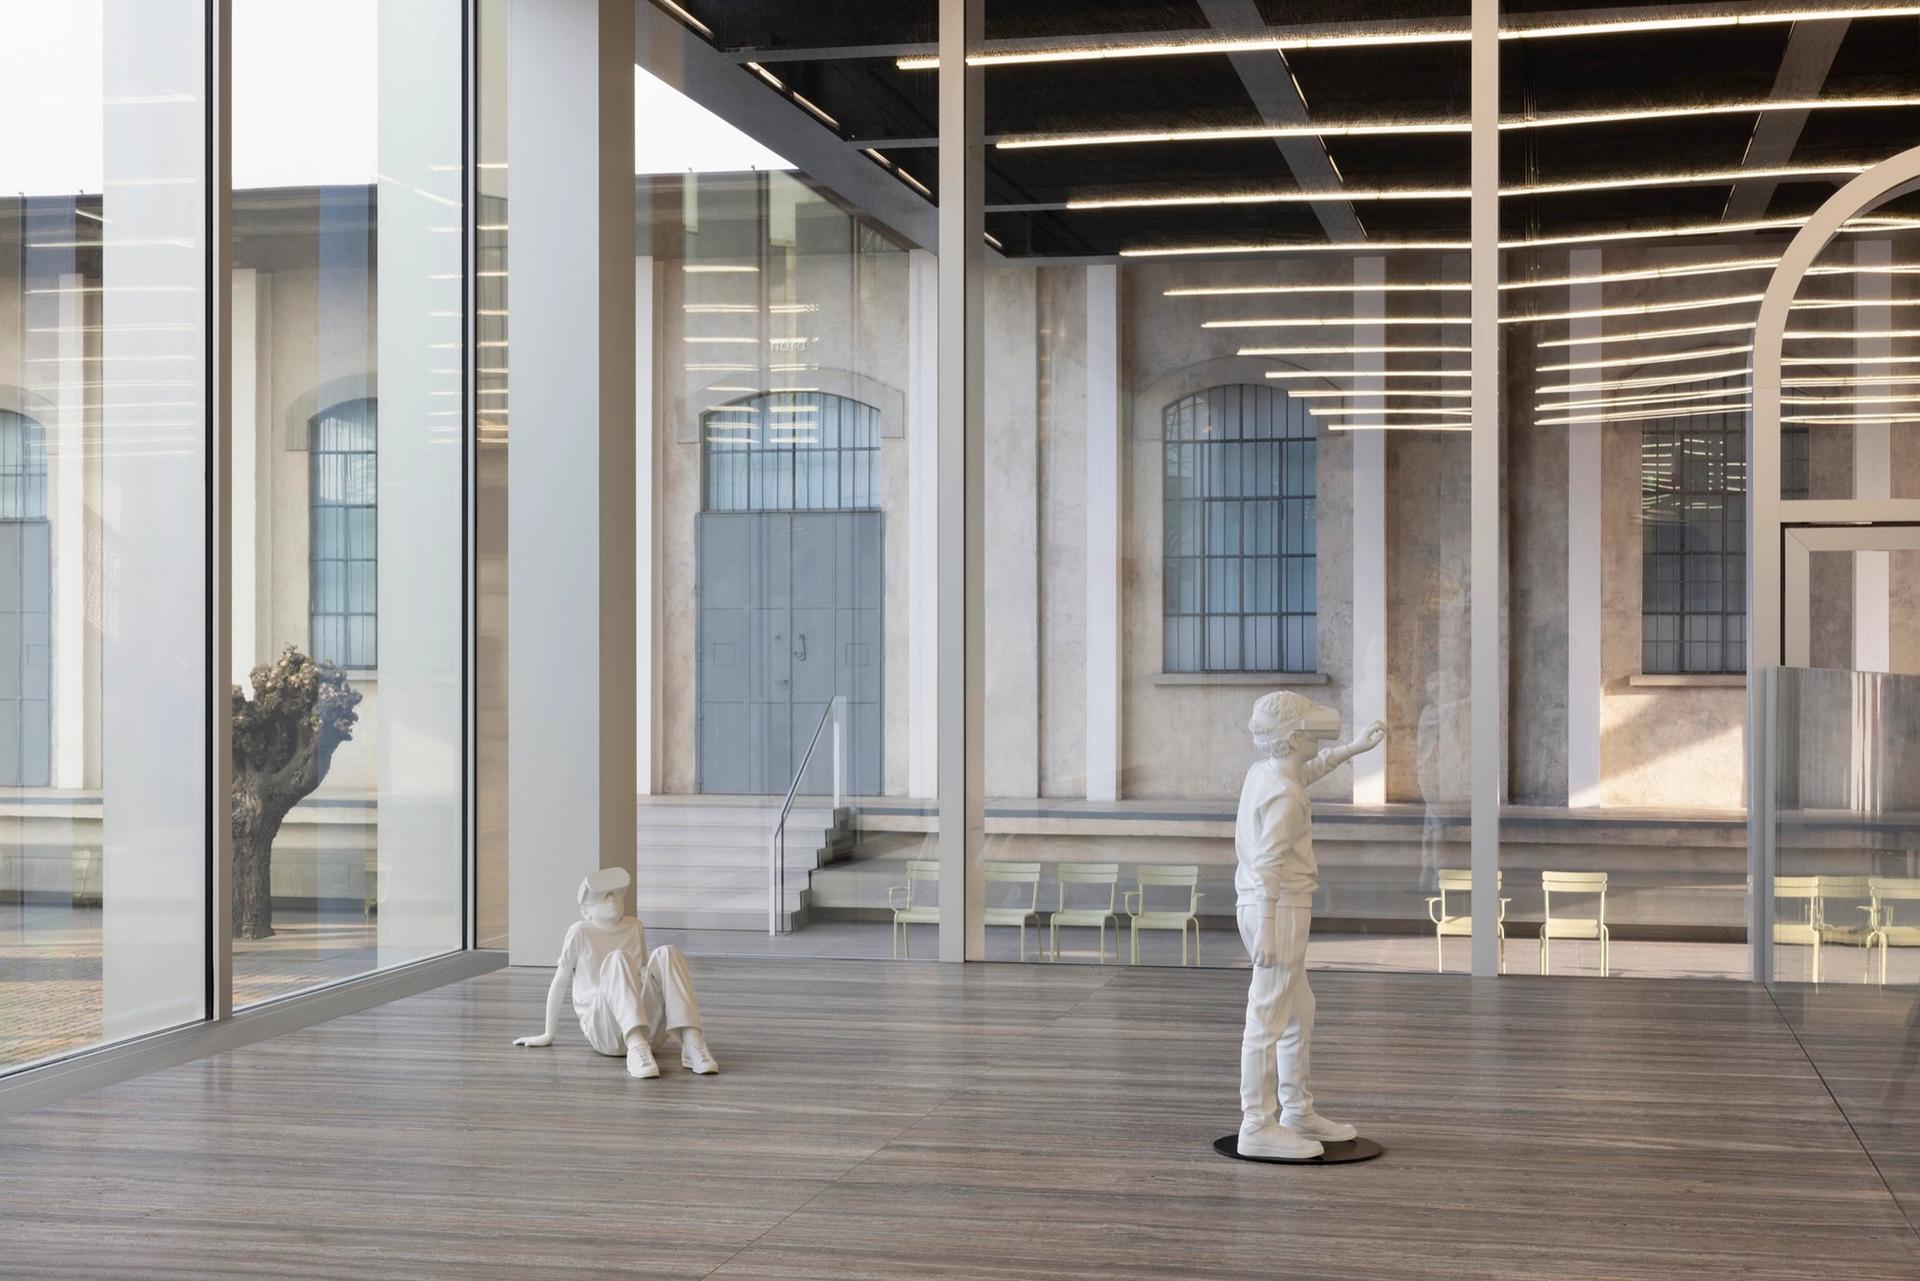 Installation view, Elmgreen & Dragset, “Useless Bodies?" Fondazione Prada, Milan. Photo: Andrea Rossetti; courtesy of Fondazione Prada